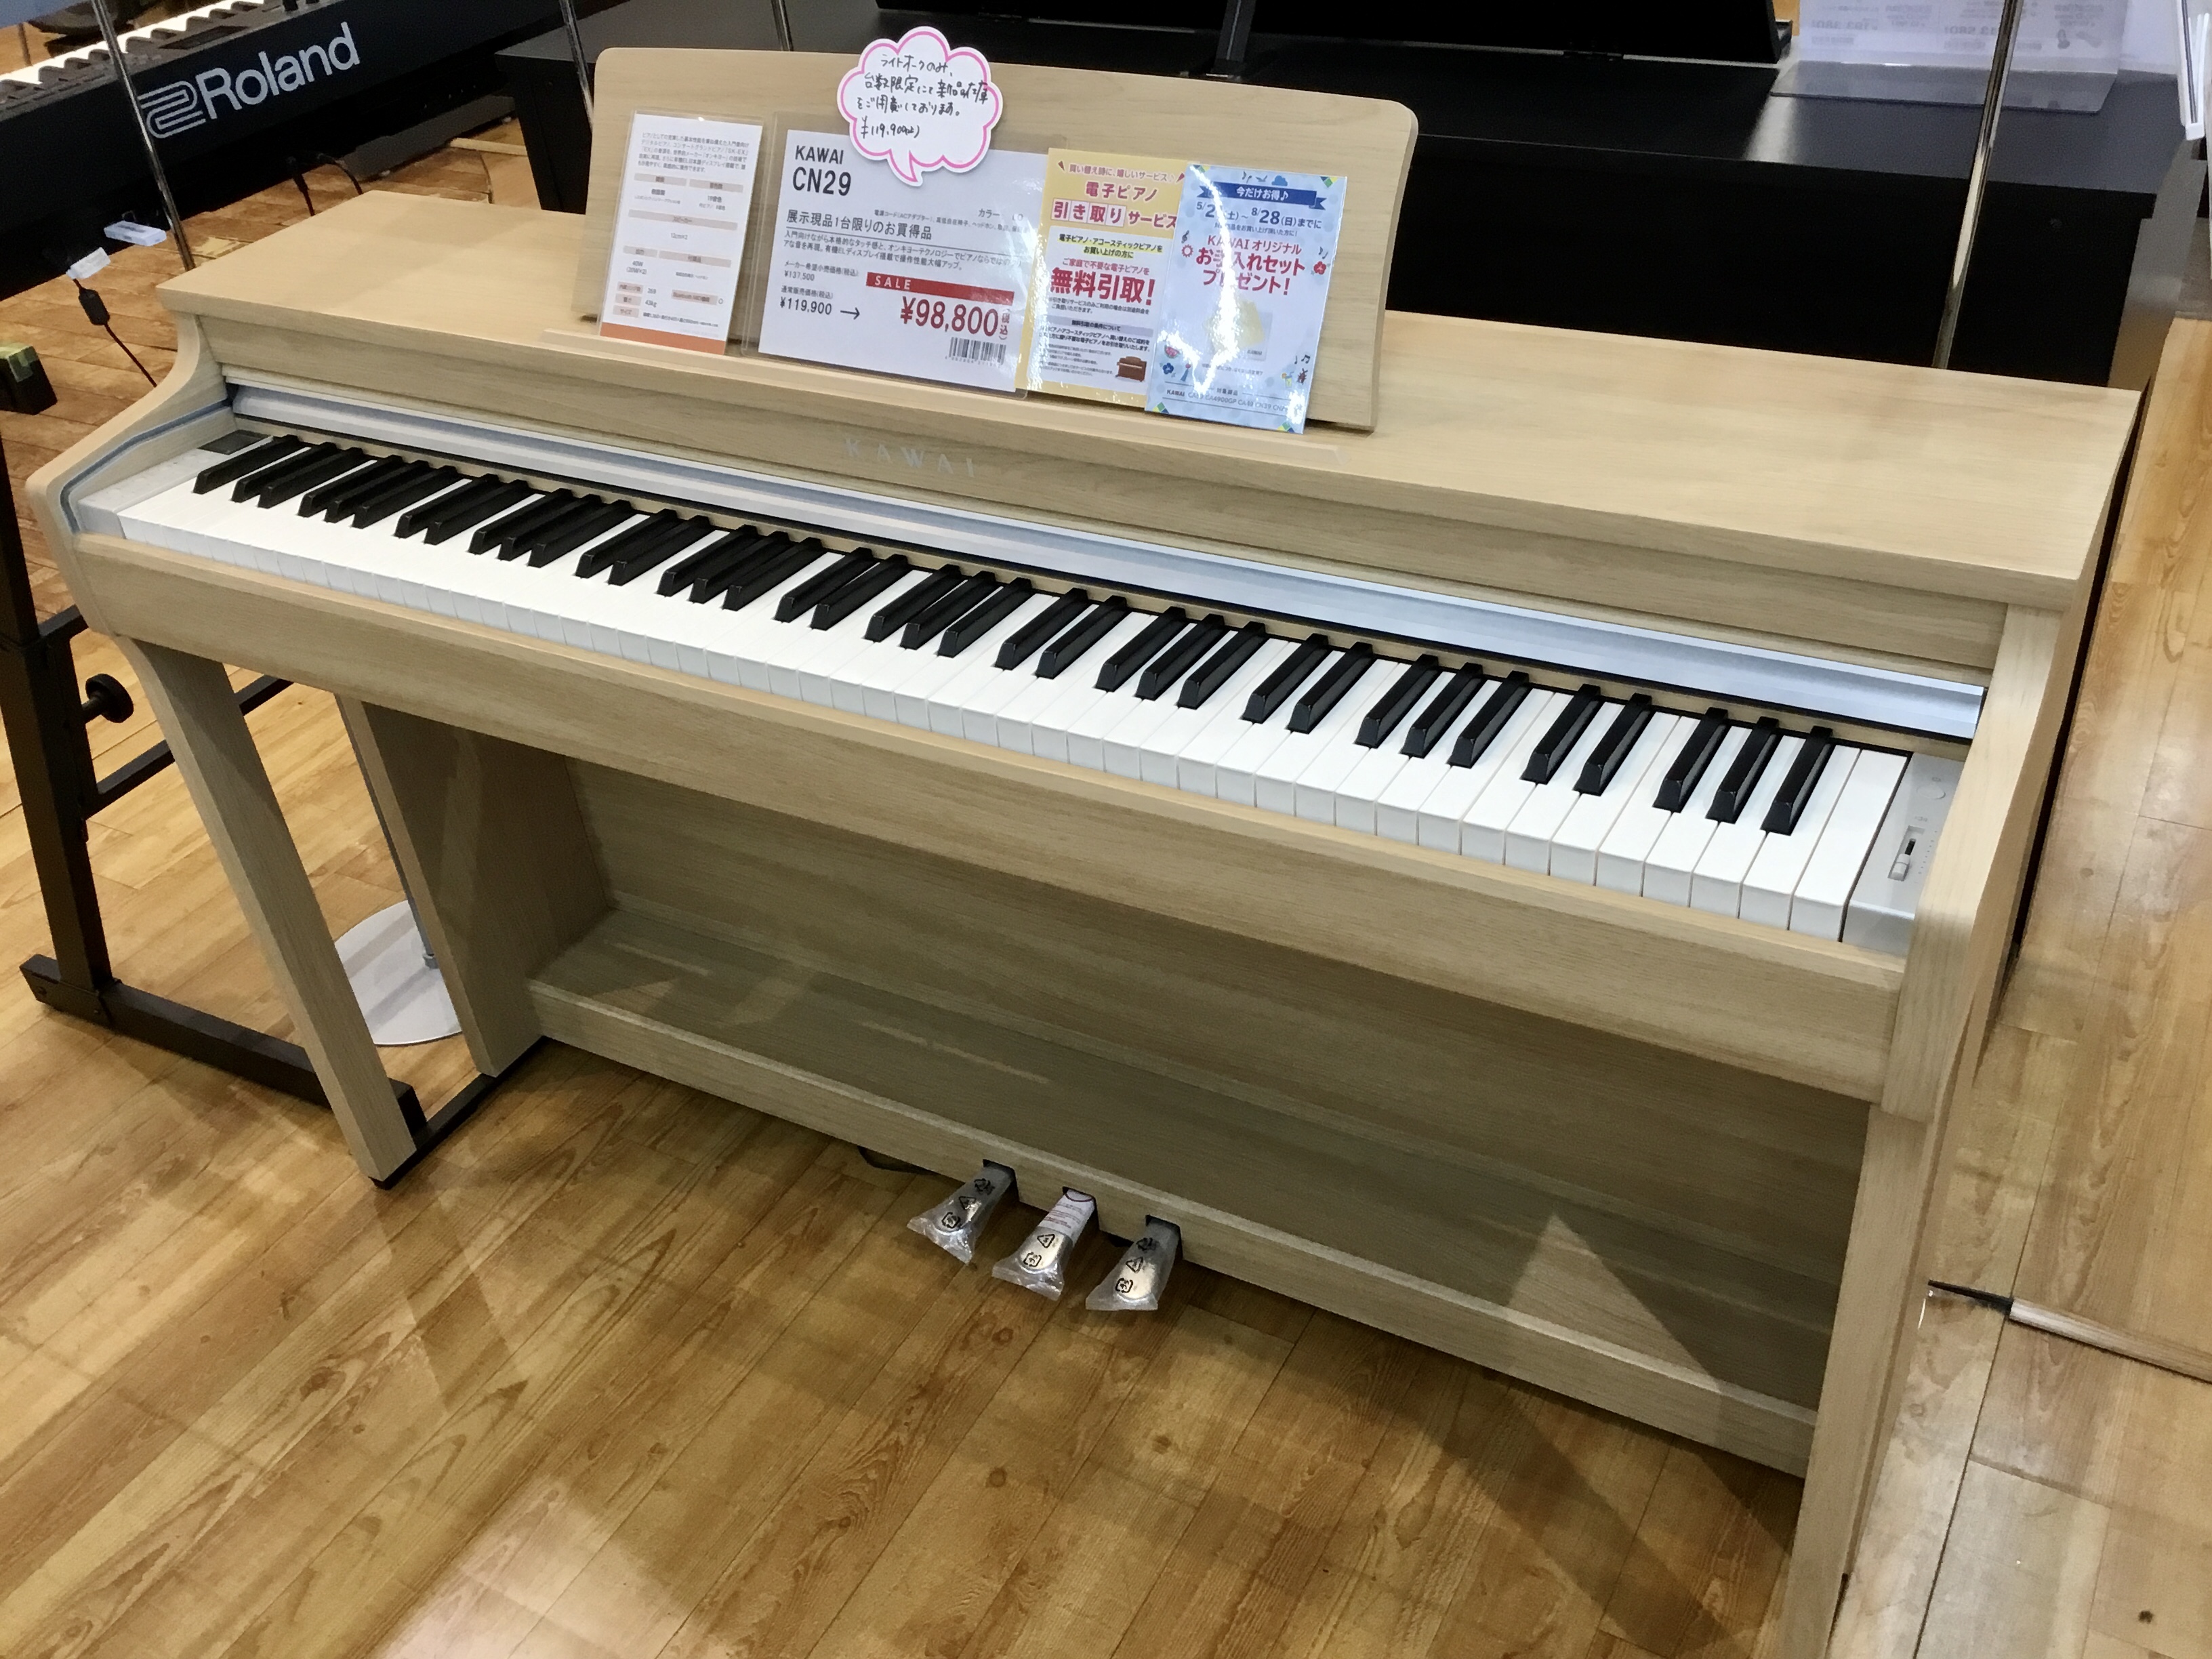 KAWAI 電子ピアノ【CN29LO】が展示品限りでお買い得になりました ...